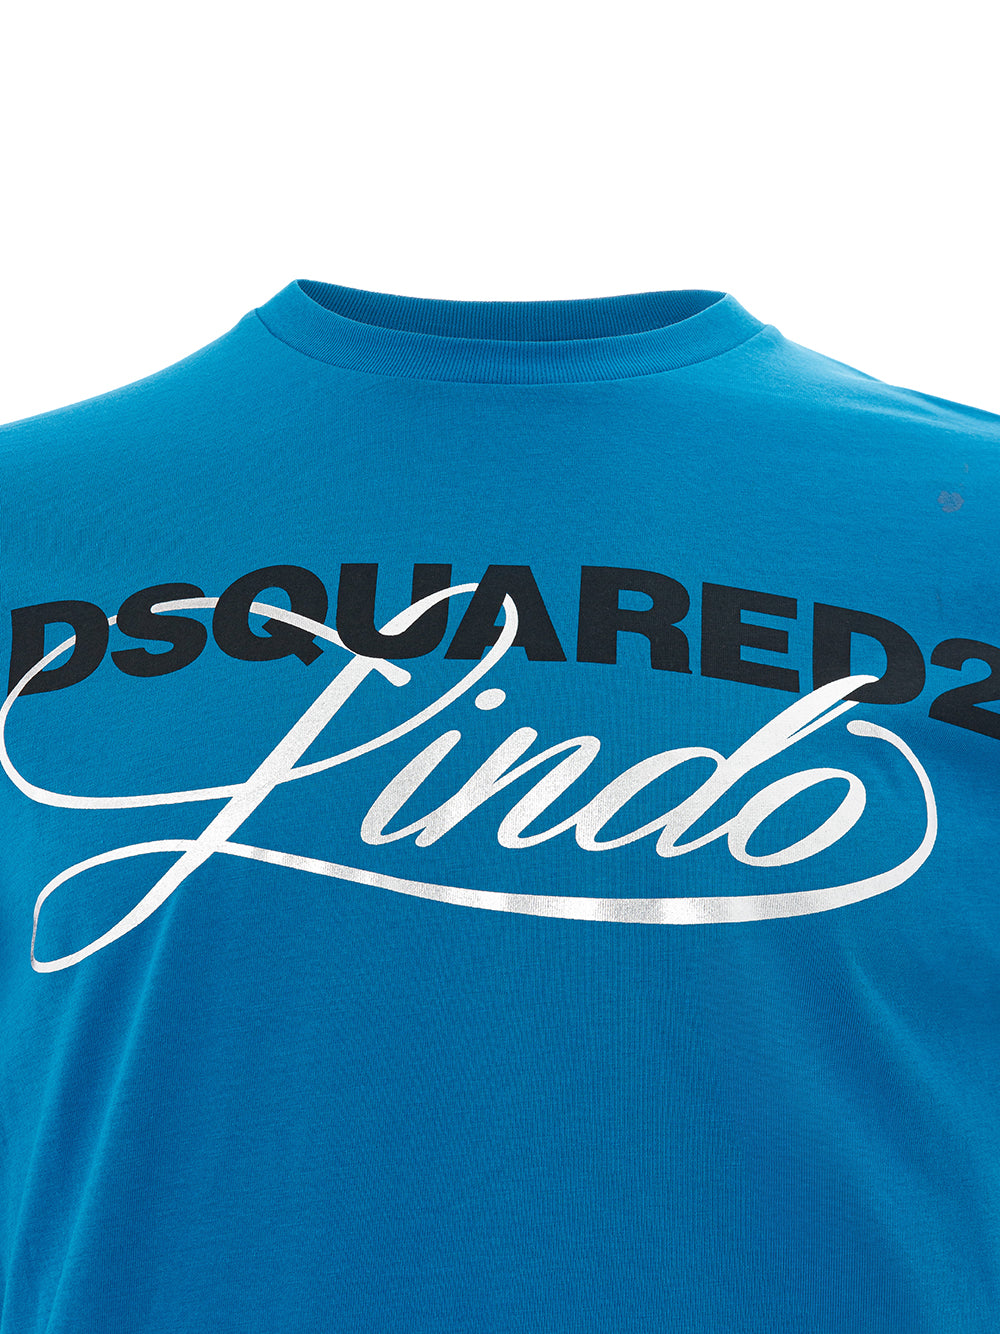 Dsquared2 t-shirt blu